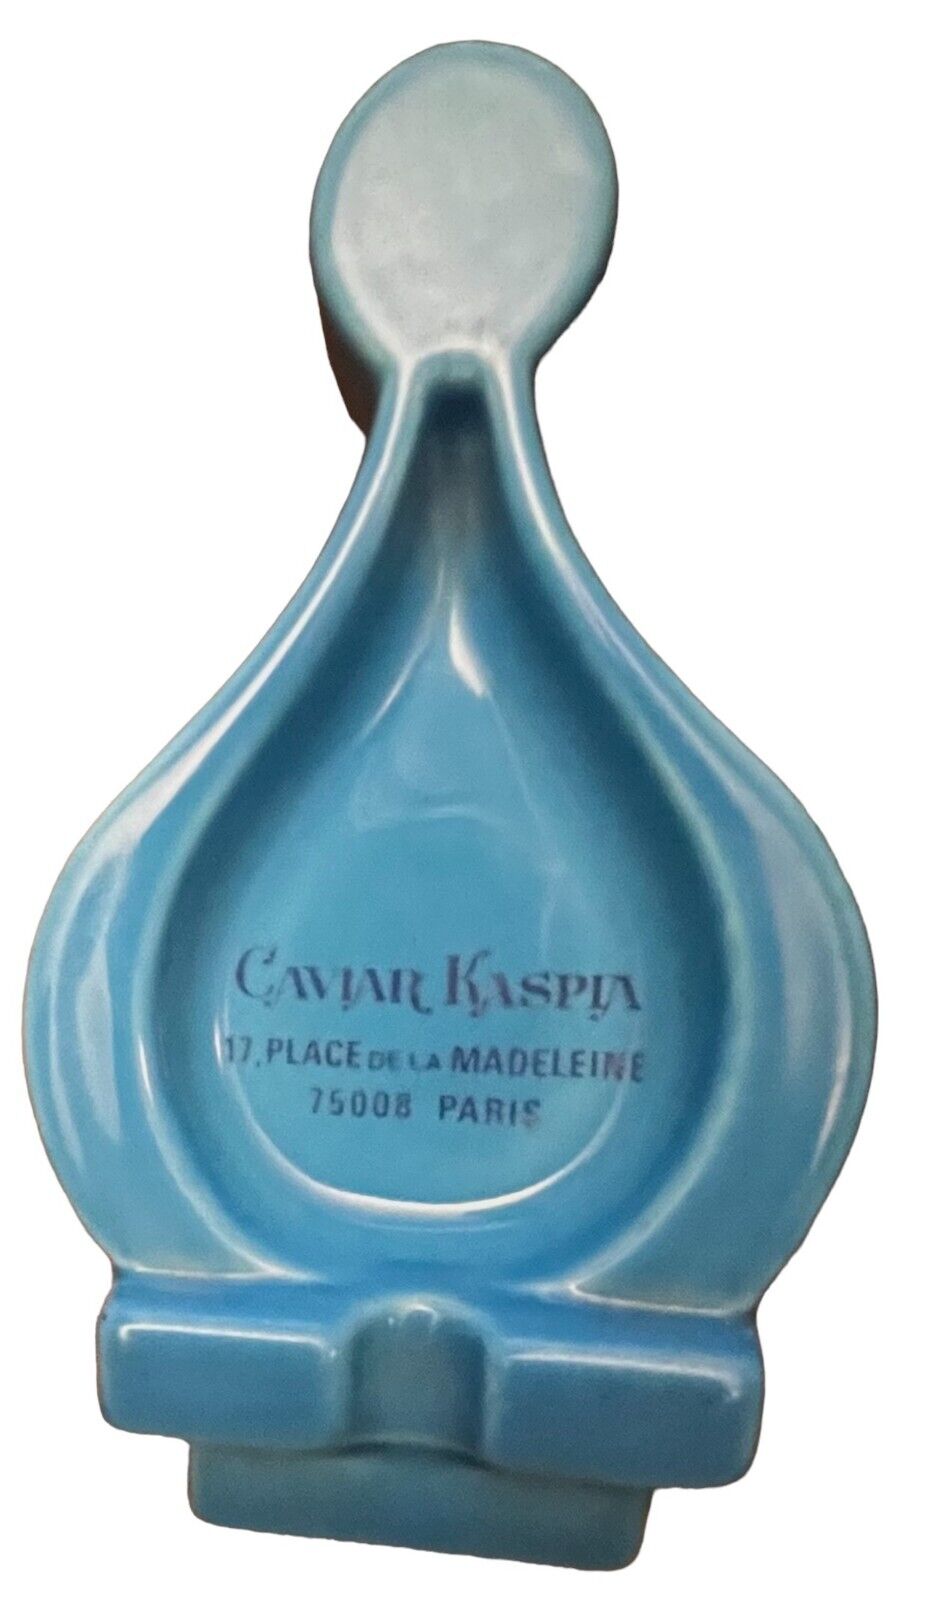 Caviar KASPIA Restaurant,  Paris, Iconic Aqua, Ashtray, Rare COLLECTIBLE